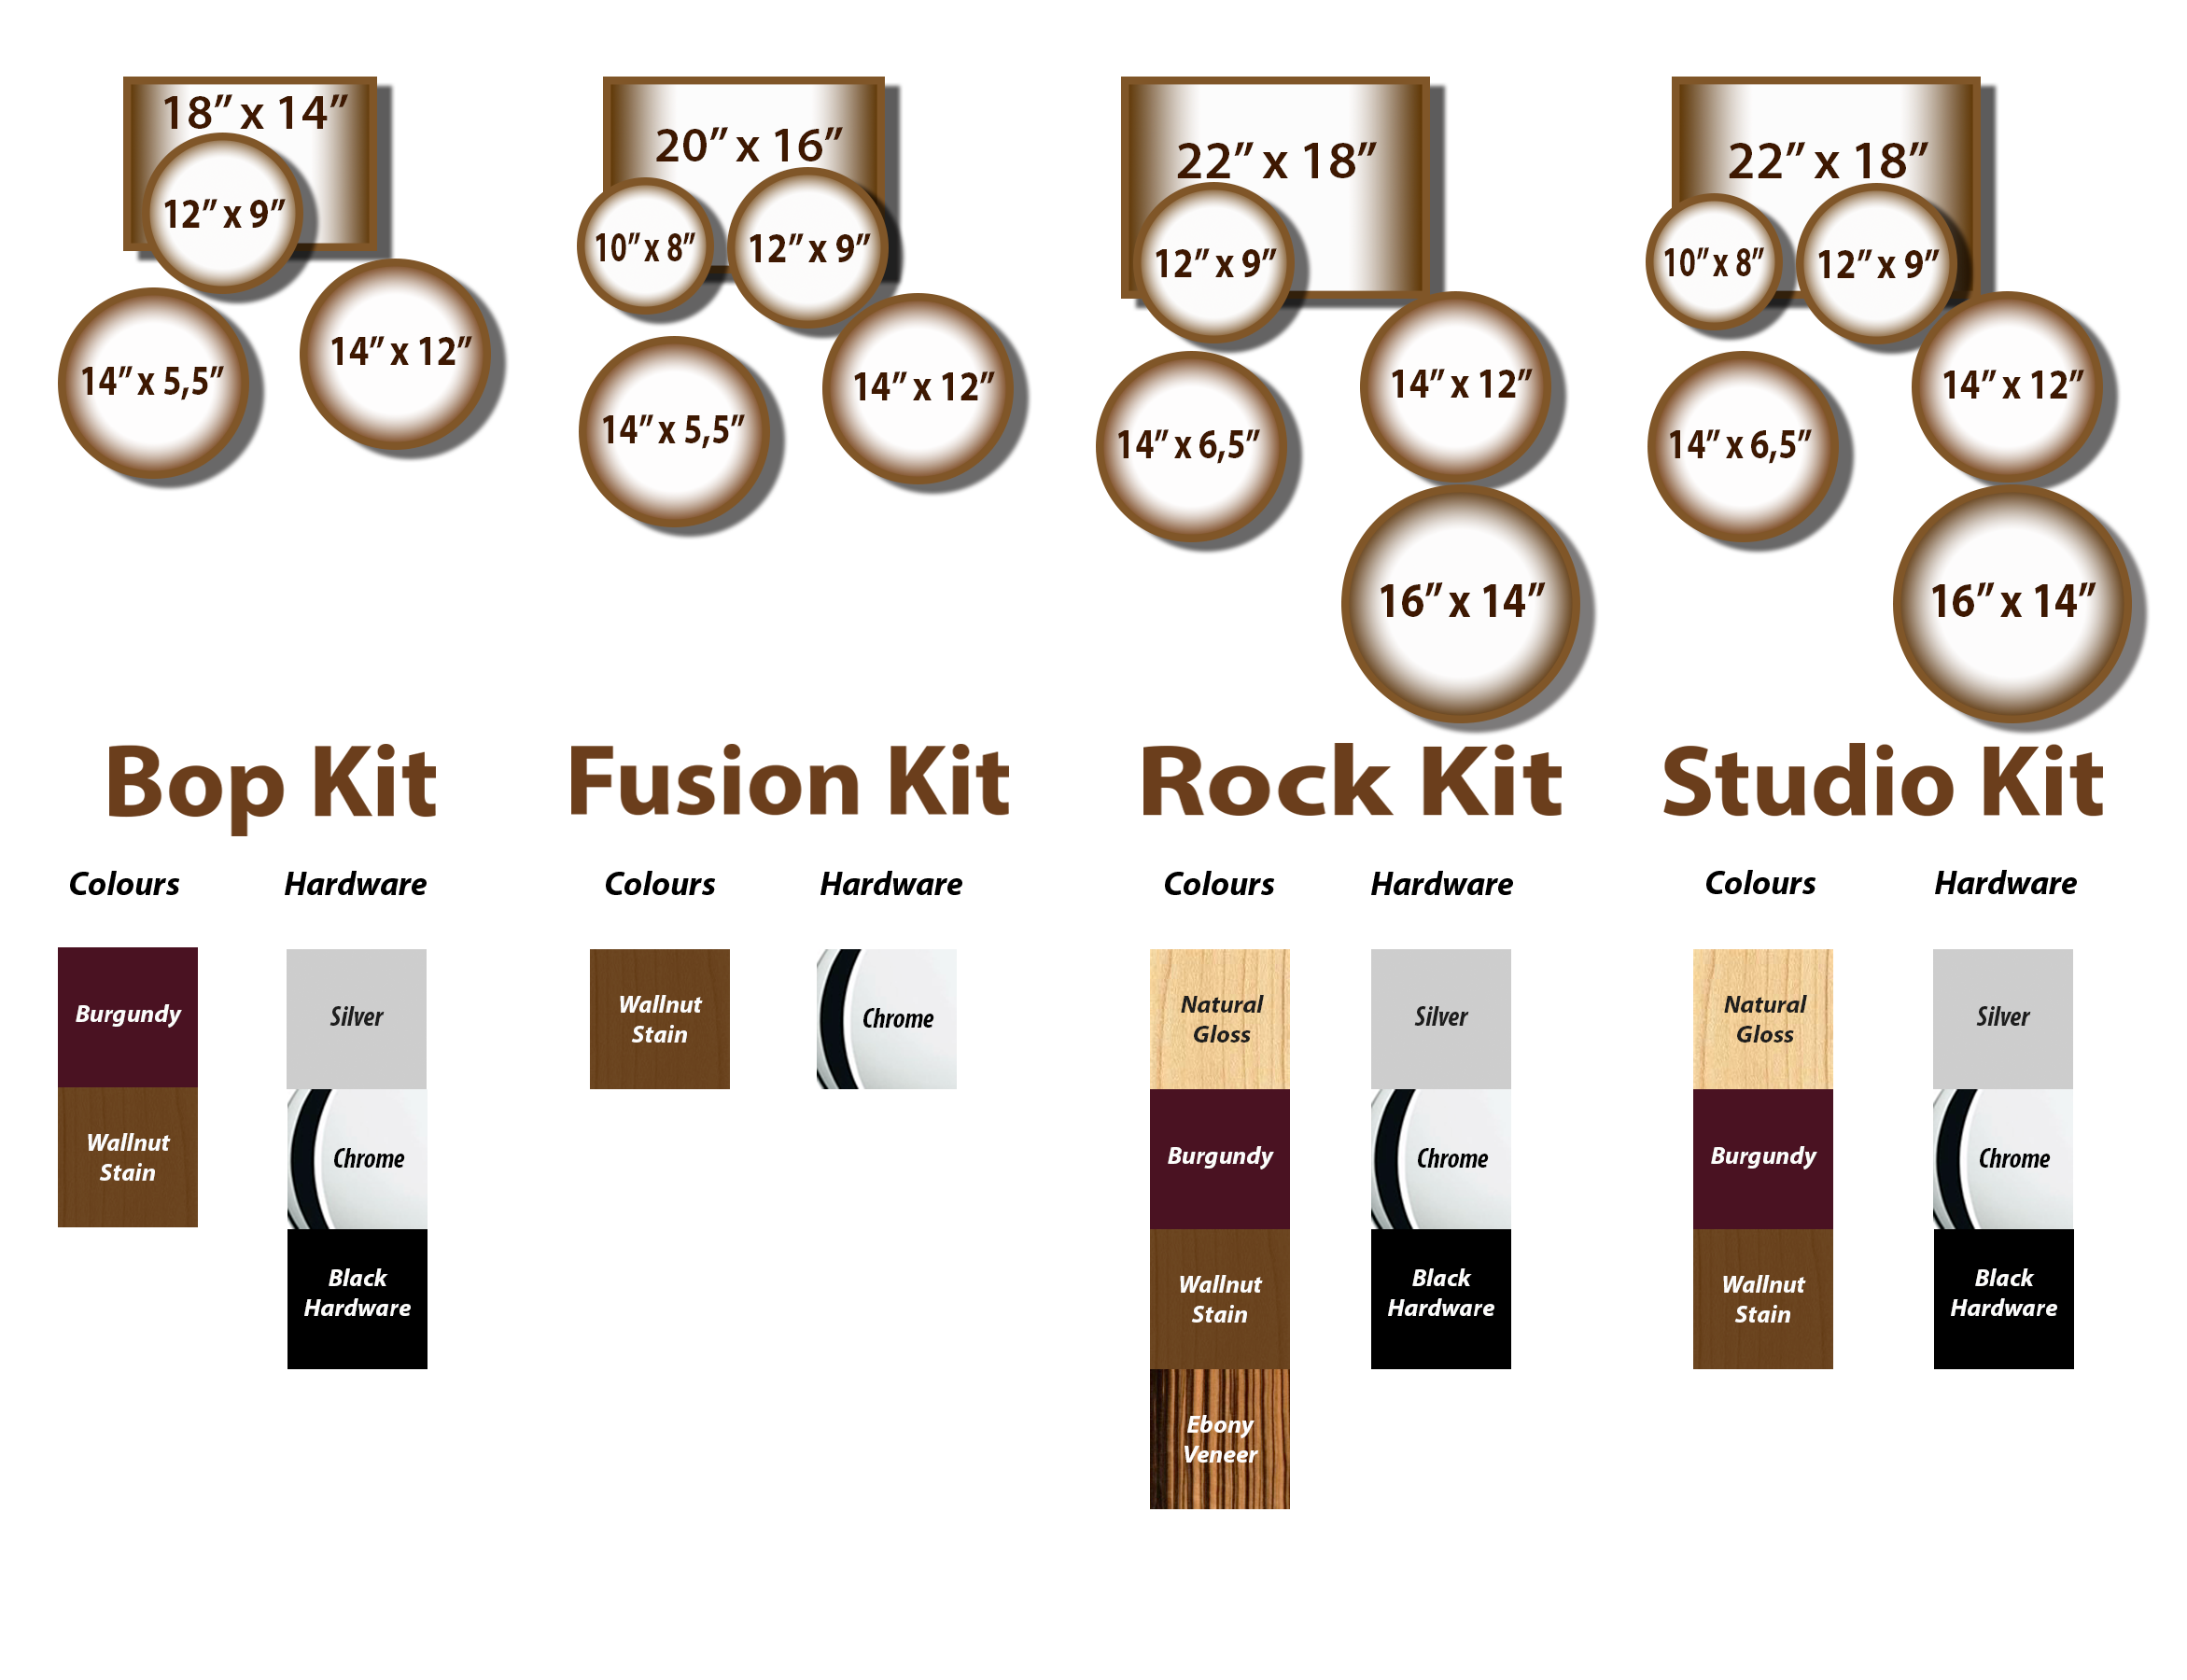 Colours and hardware of Sleishman Pro Series kits